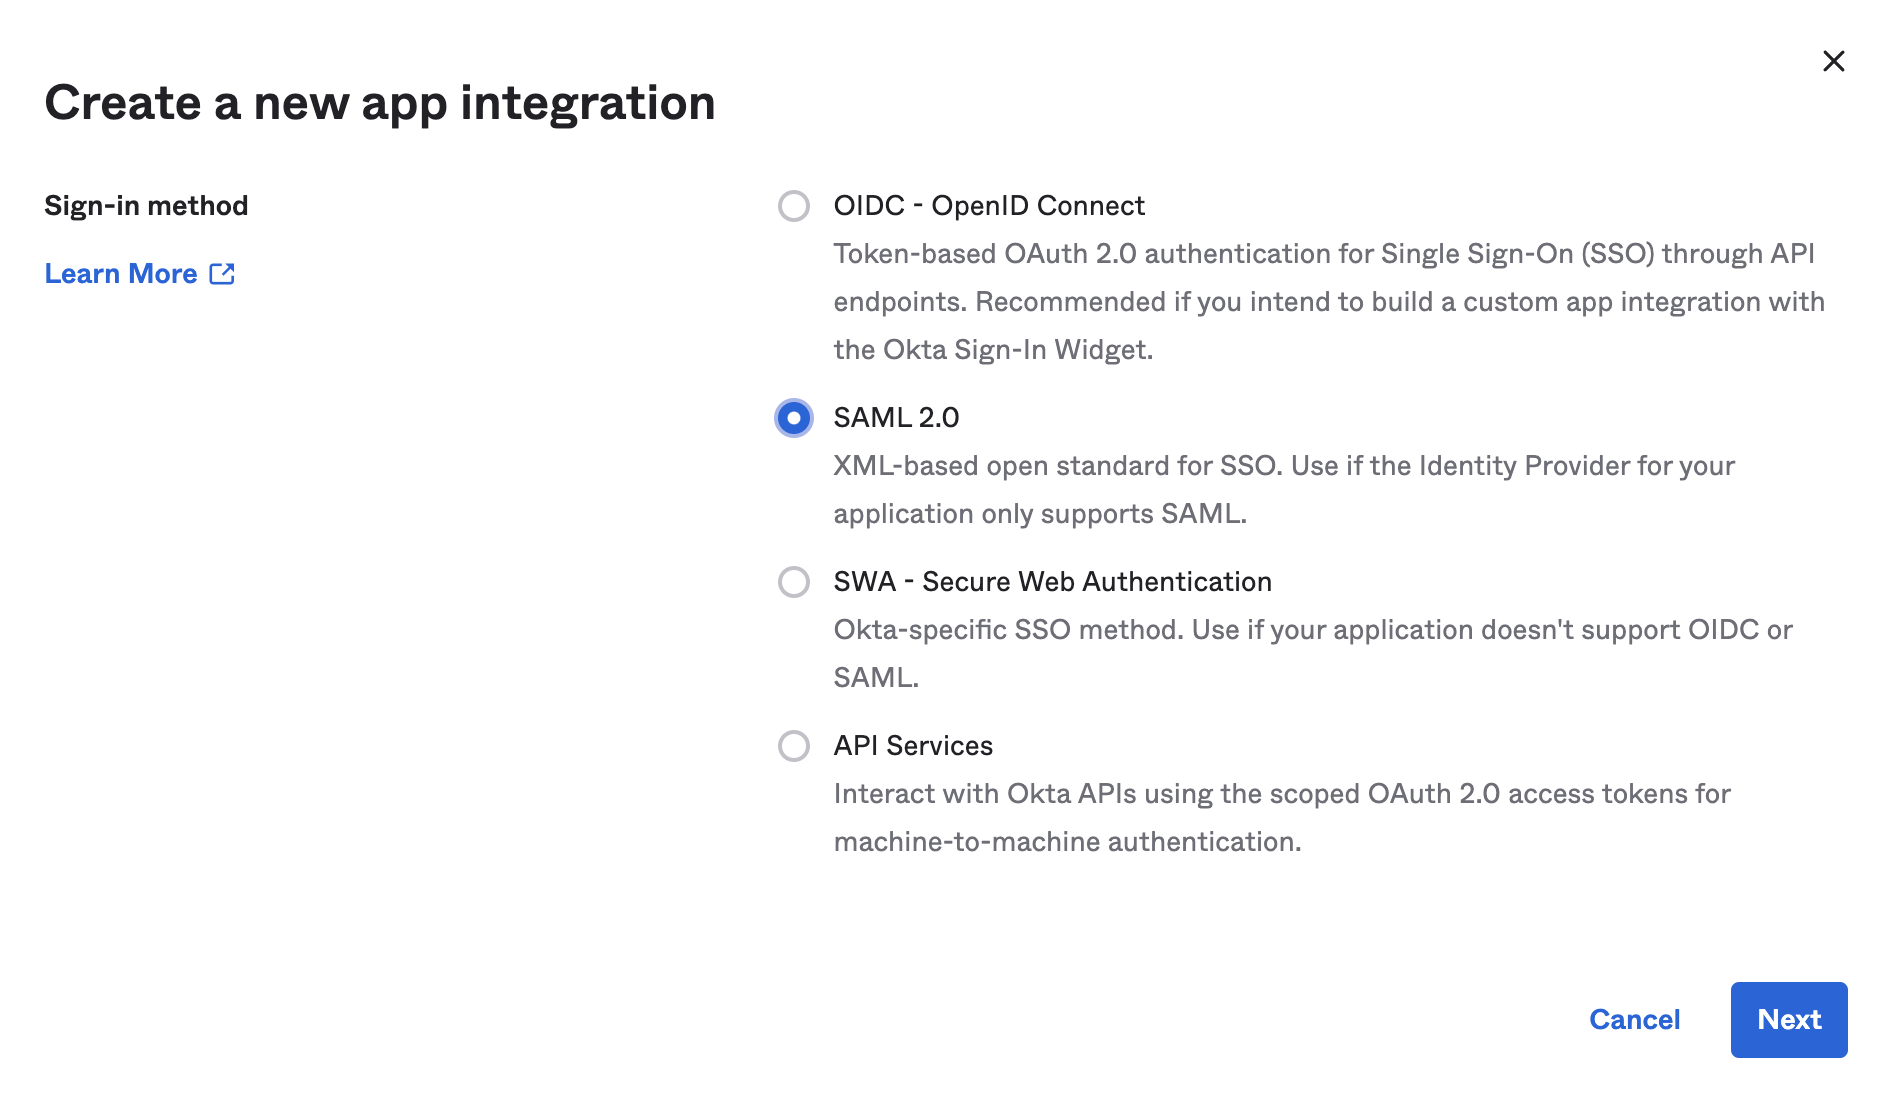 Choose SAML 2.0 as the new app integration type